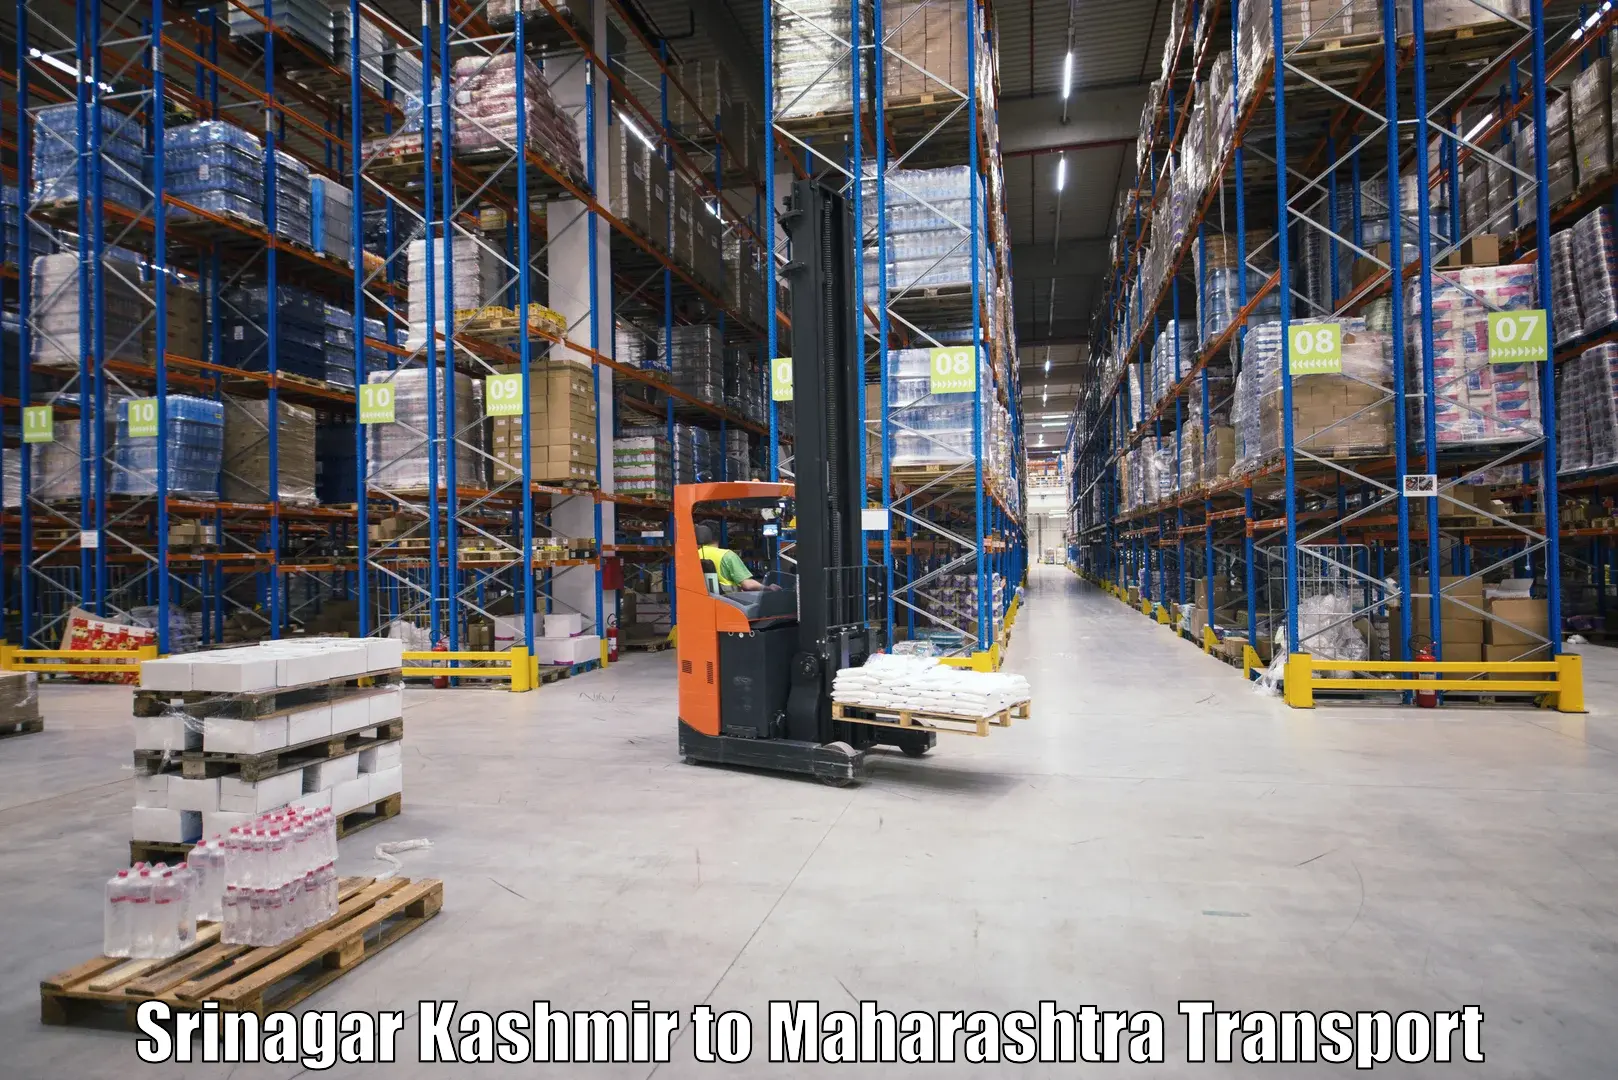 Truck transport companies in India Srinagar Kashmir to Ojhar